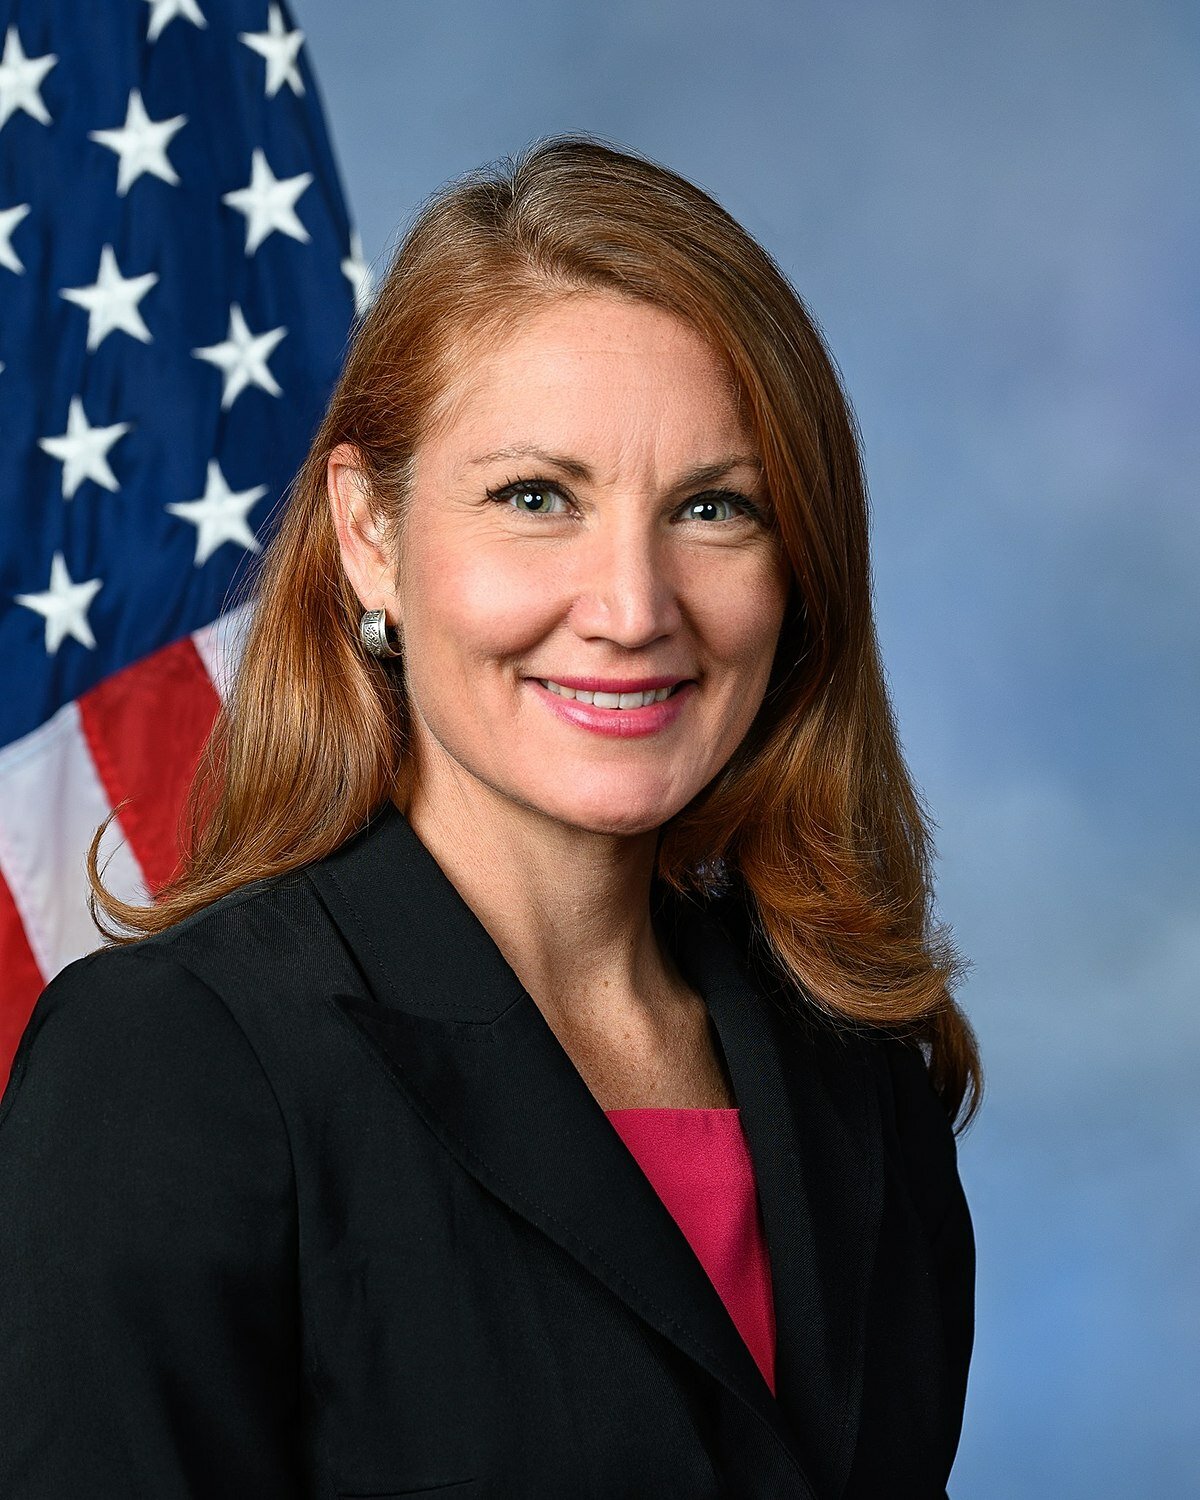 US Rep. Melanie Stansbury (D-NM1)